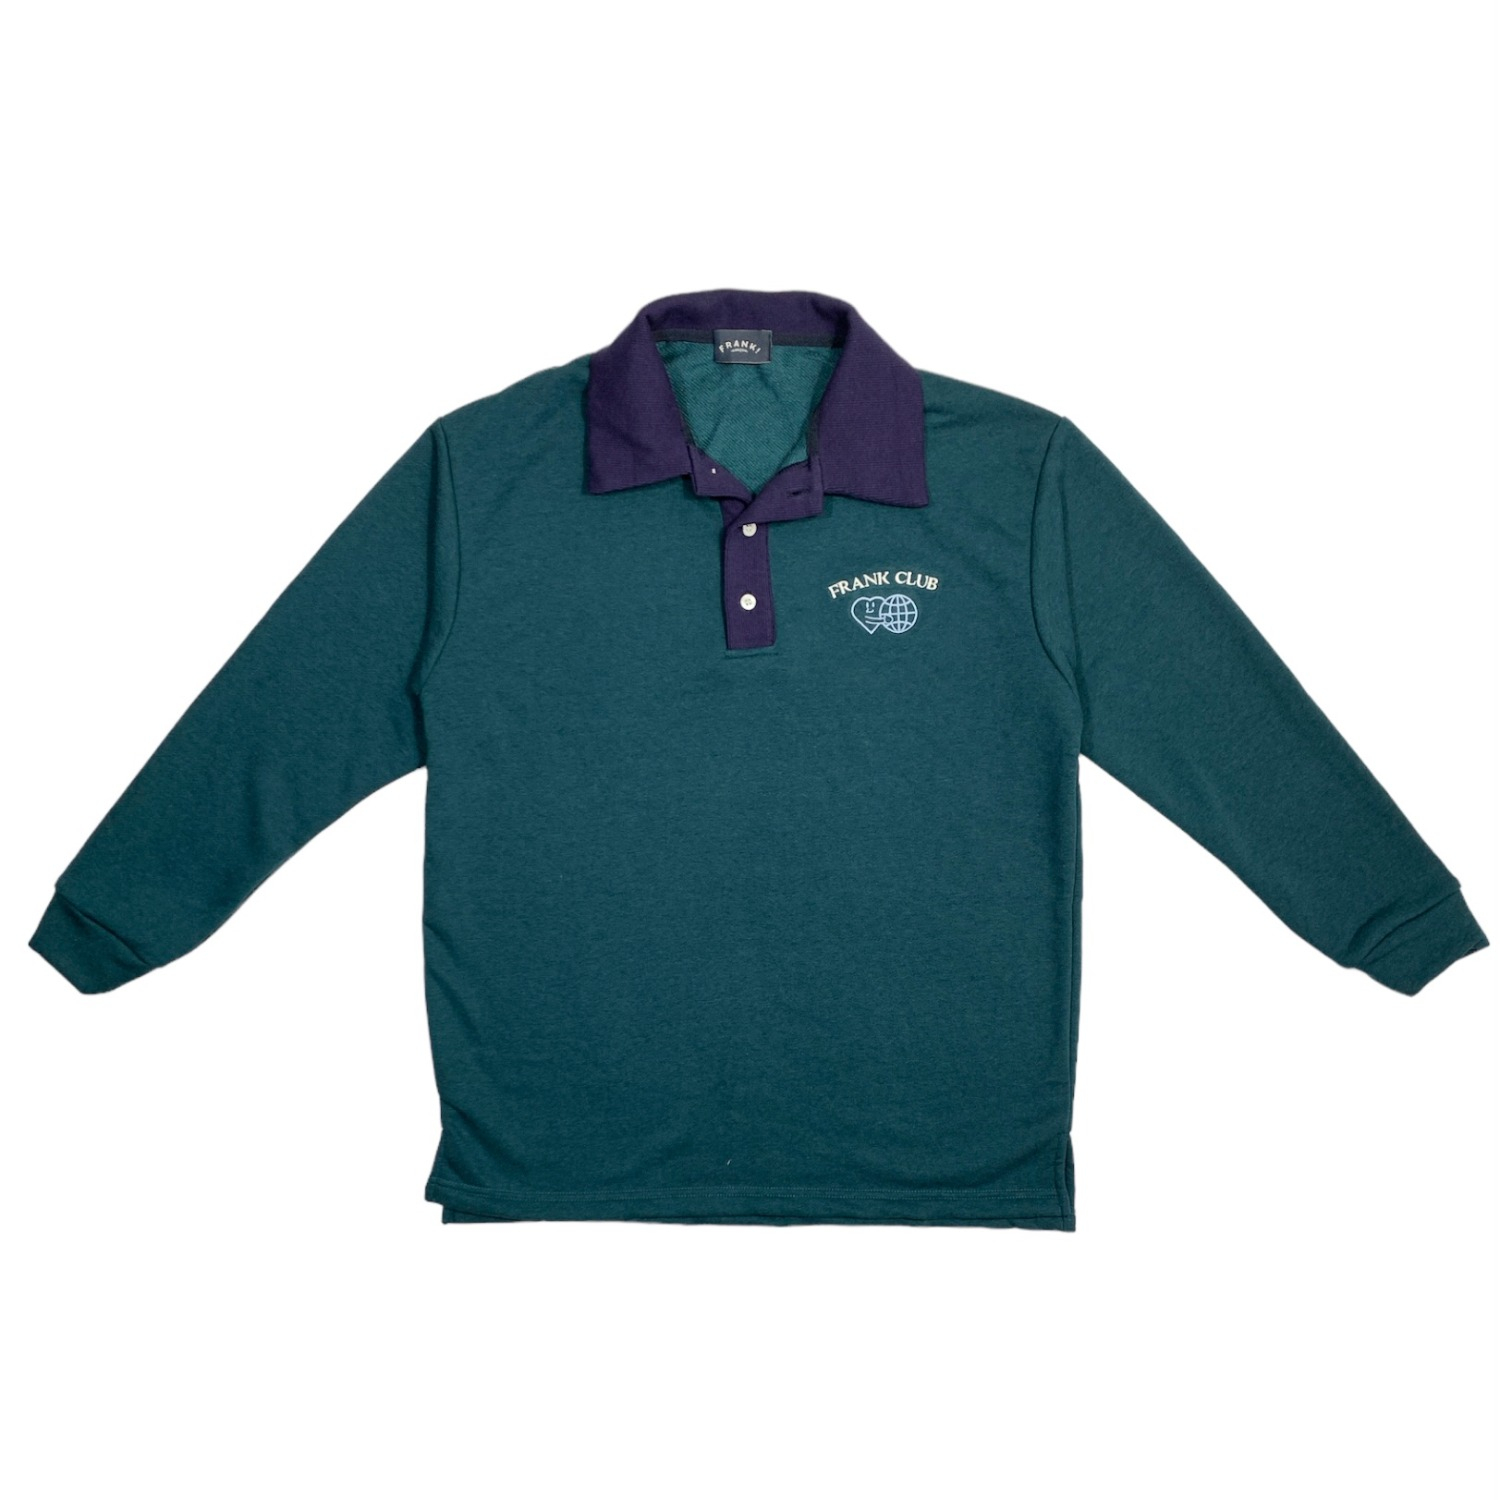 Frank! Club Polo Sweatshirt (Green / Purple)